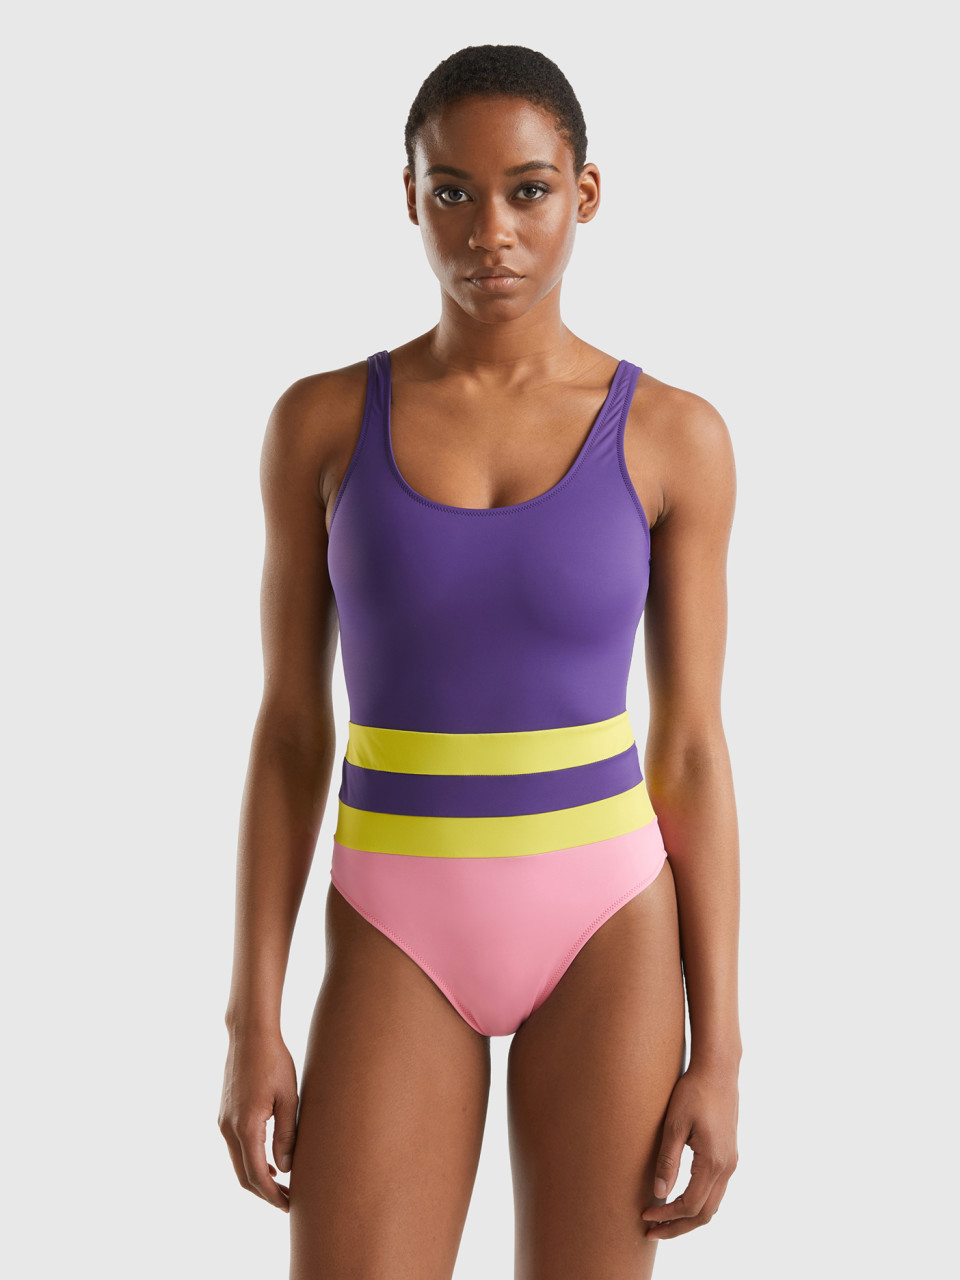 Benetton, One-piece Swimsuit In Econyl®, Multi-color, Women